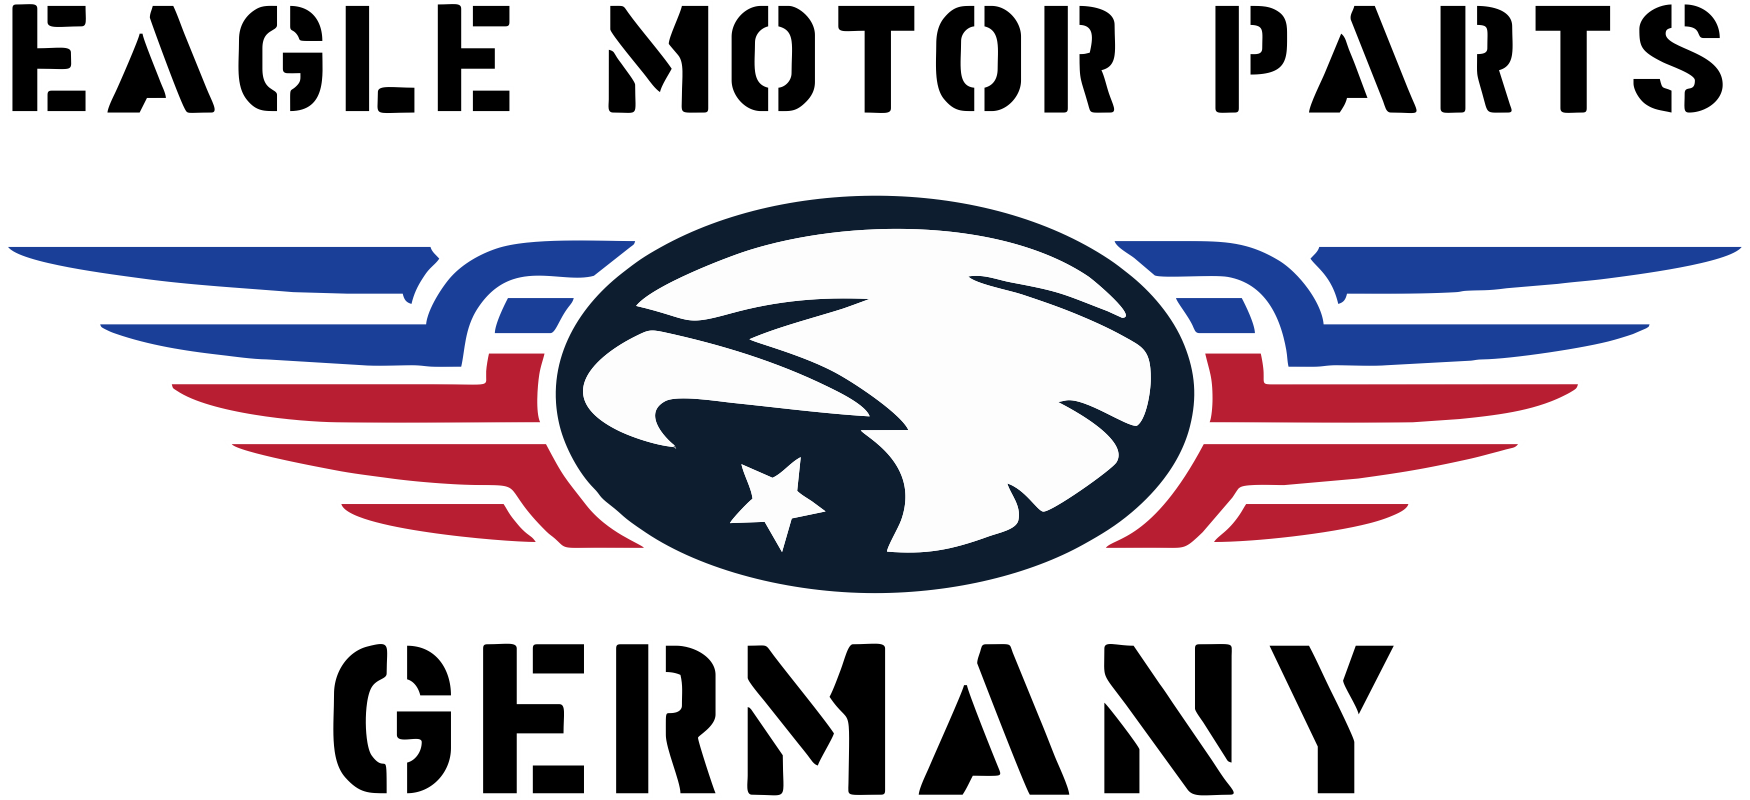 Eagle Motor Parts Deutschland: Fahrzeuge, Import, Service, Reparatur, Tuning für US Cars: Dodge, RAM, Ford, Chevrolet, Cadillac